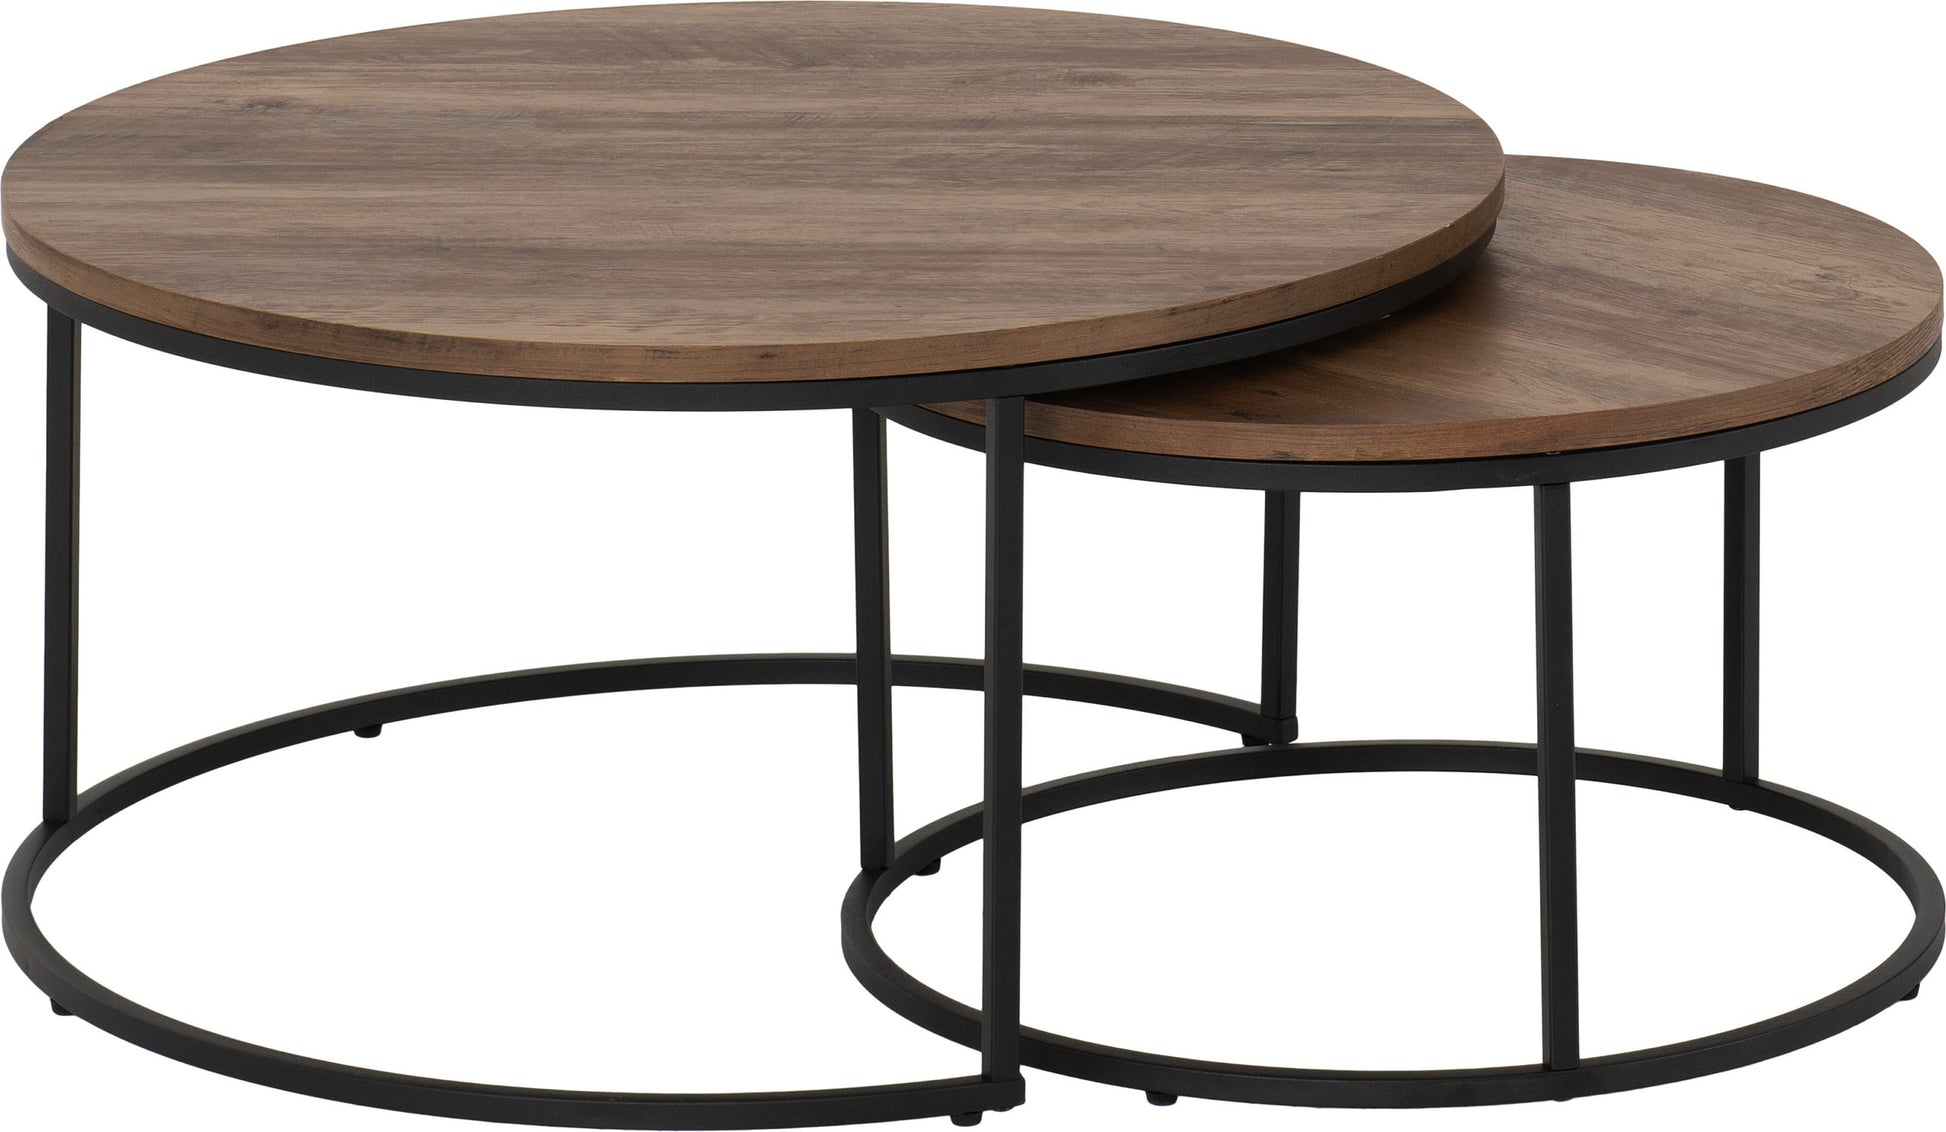 Quebec Round Coffee Table Set - Medium Oak Effect/Black